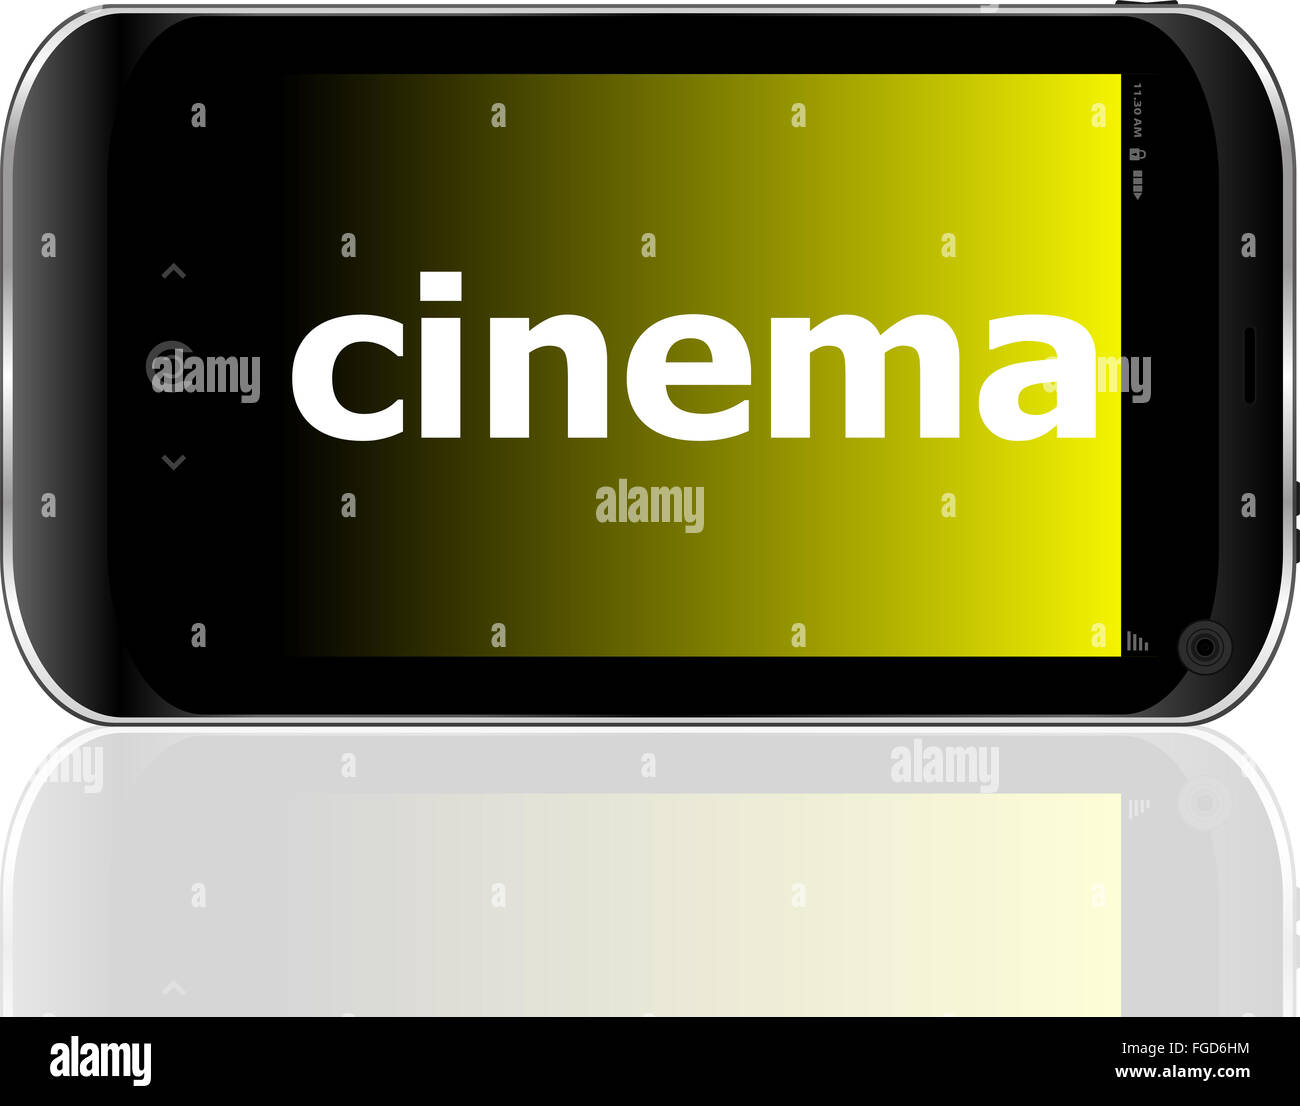 Web-Development-Konzept: Smartphone mit Wort-Kino auf dem Display Stockfoto